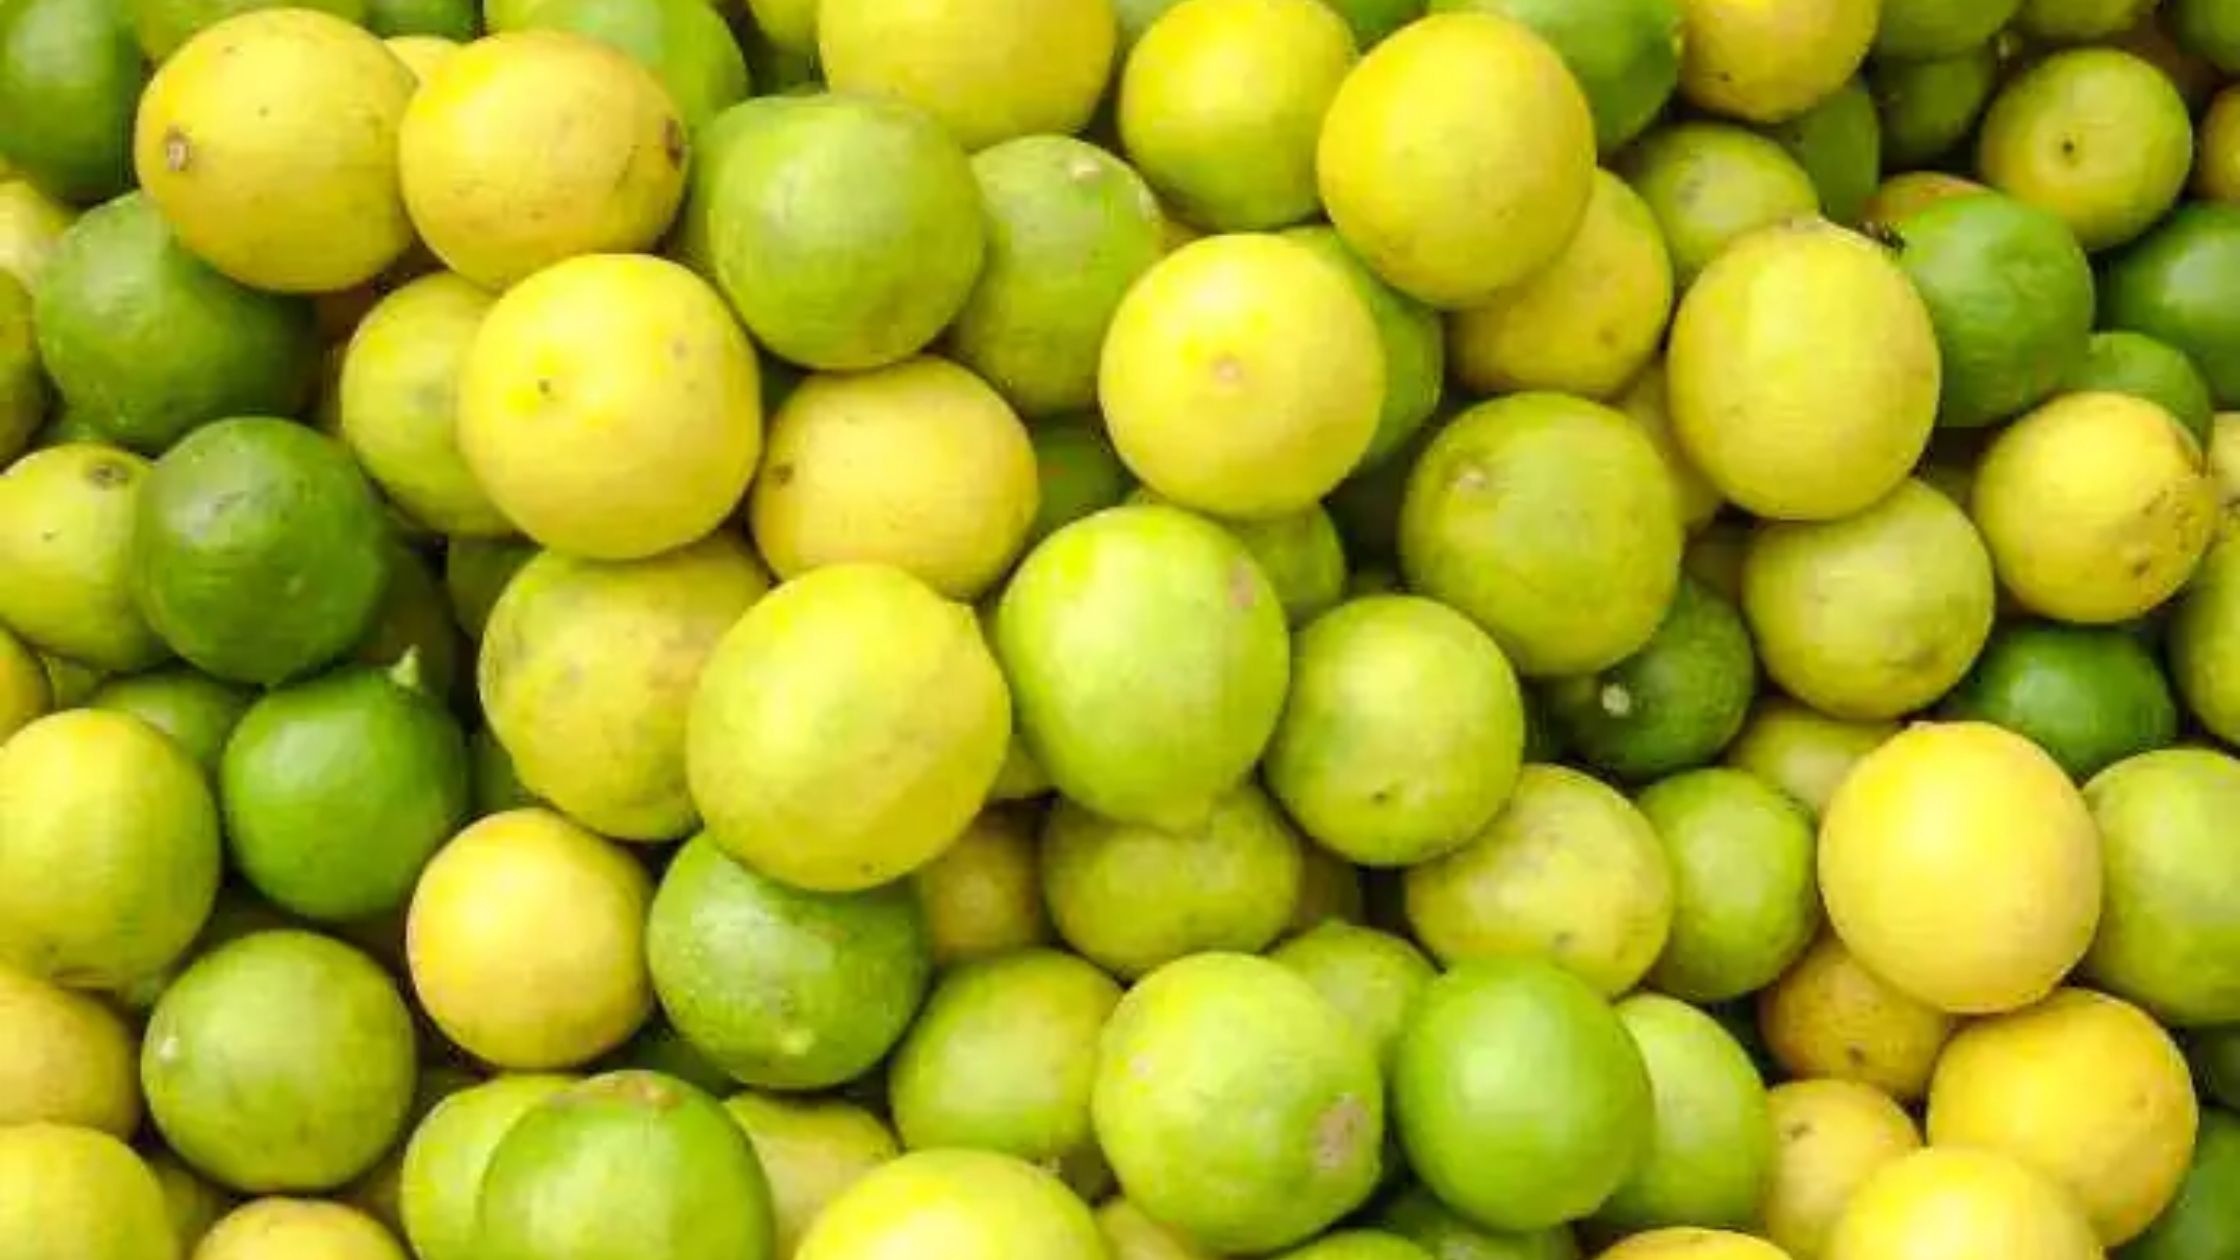 Lemon is more expensive than apple pomegranate grapefruit and banana